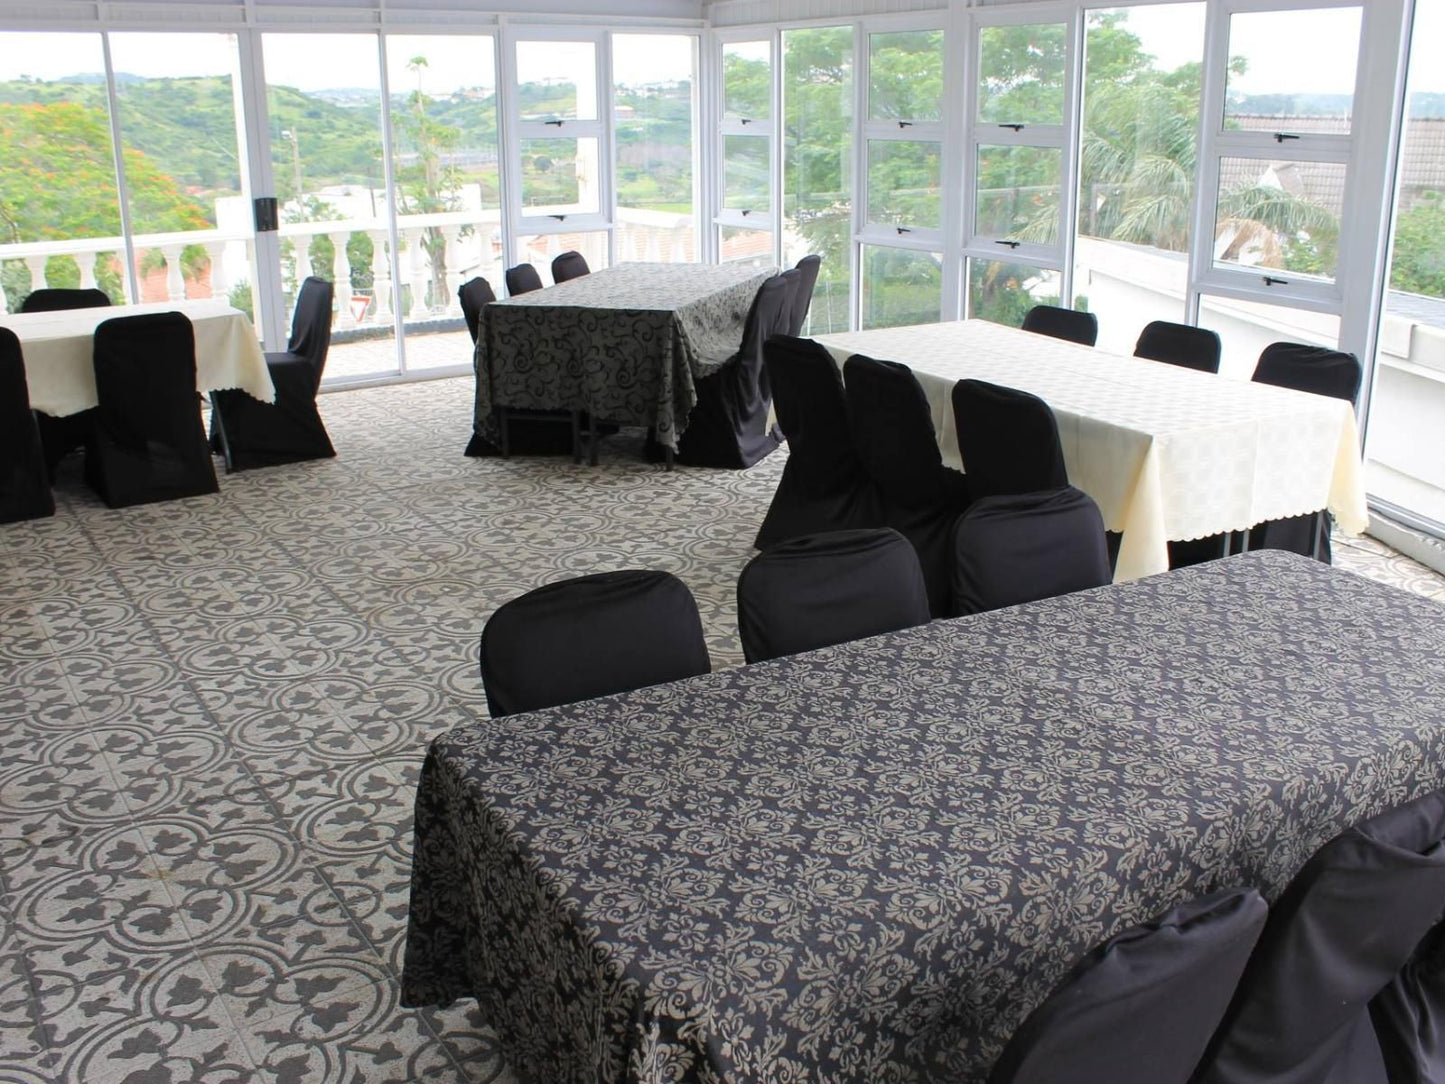 Goodwill Manor Boutique Guesthouse Reservoir Hills Durban Kwazulu Natal South Africa Unsaturated, Seminar Room